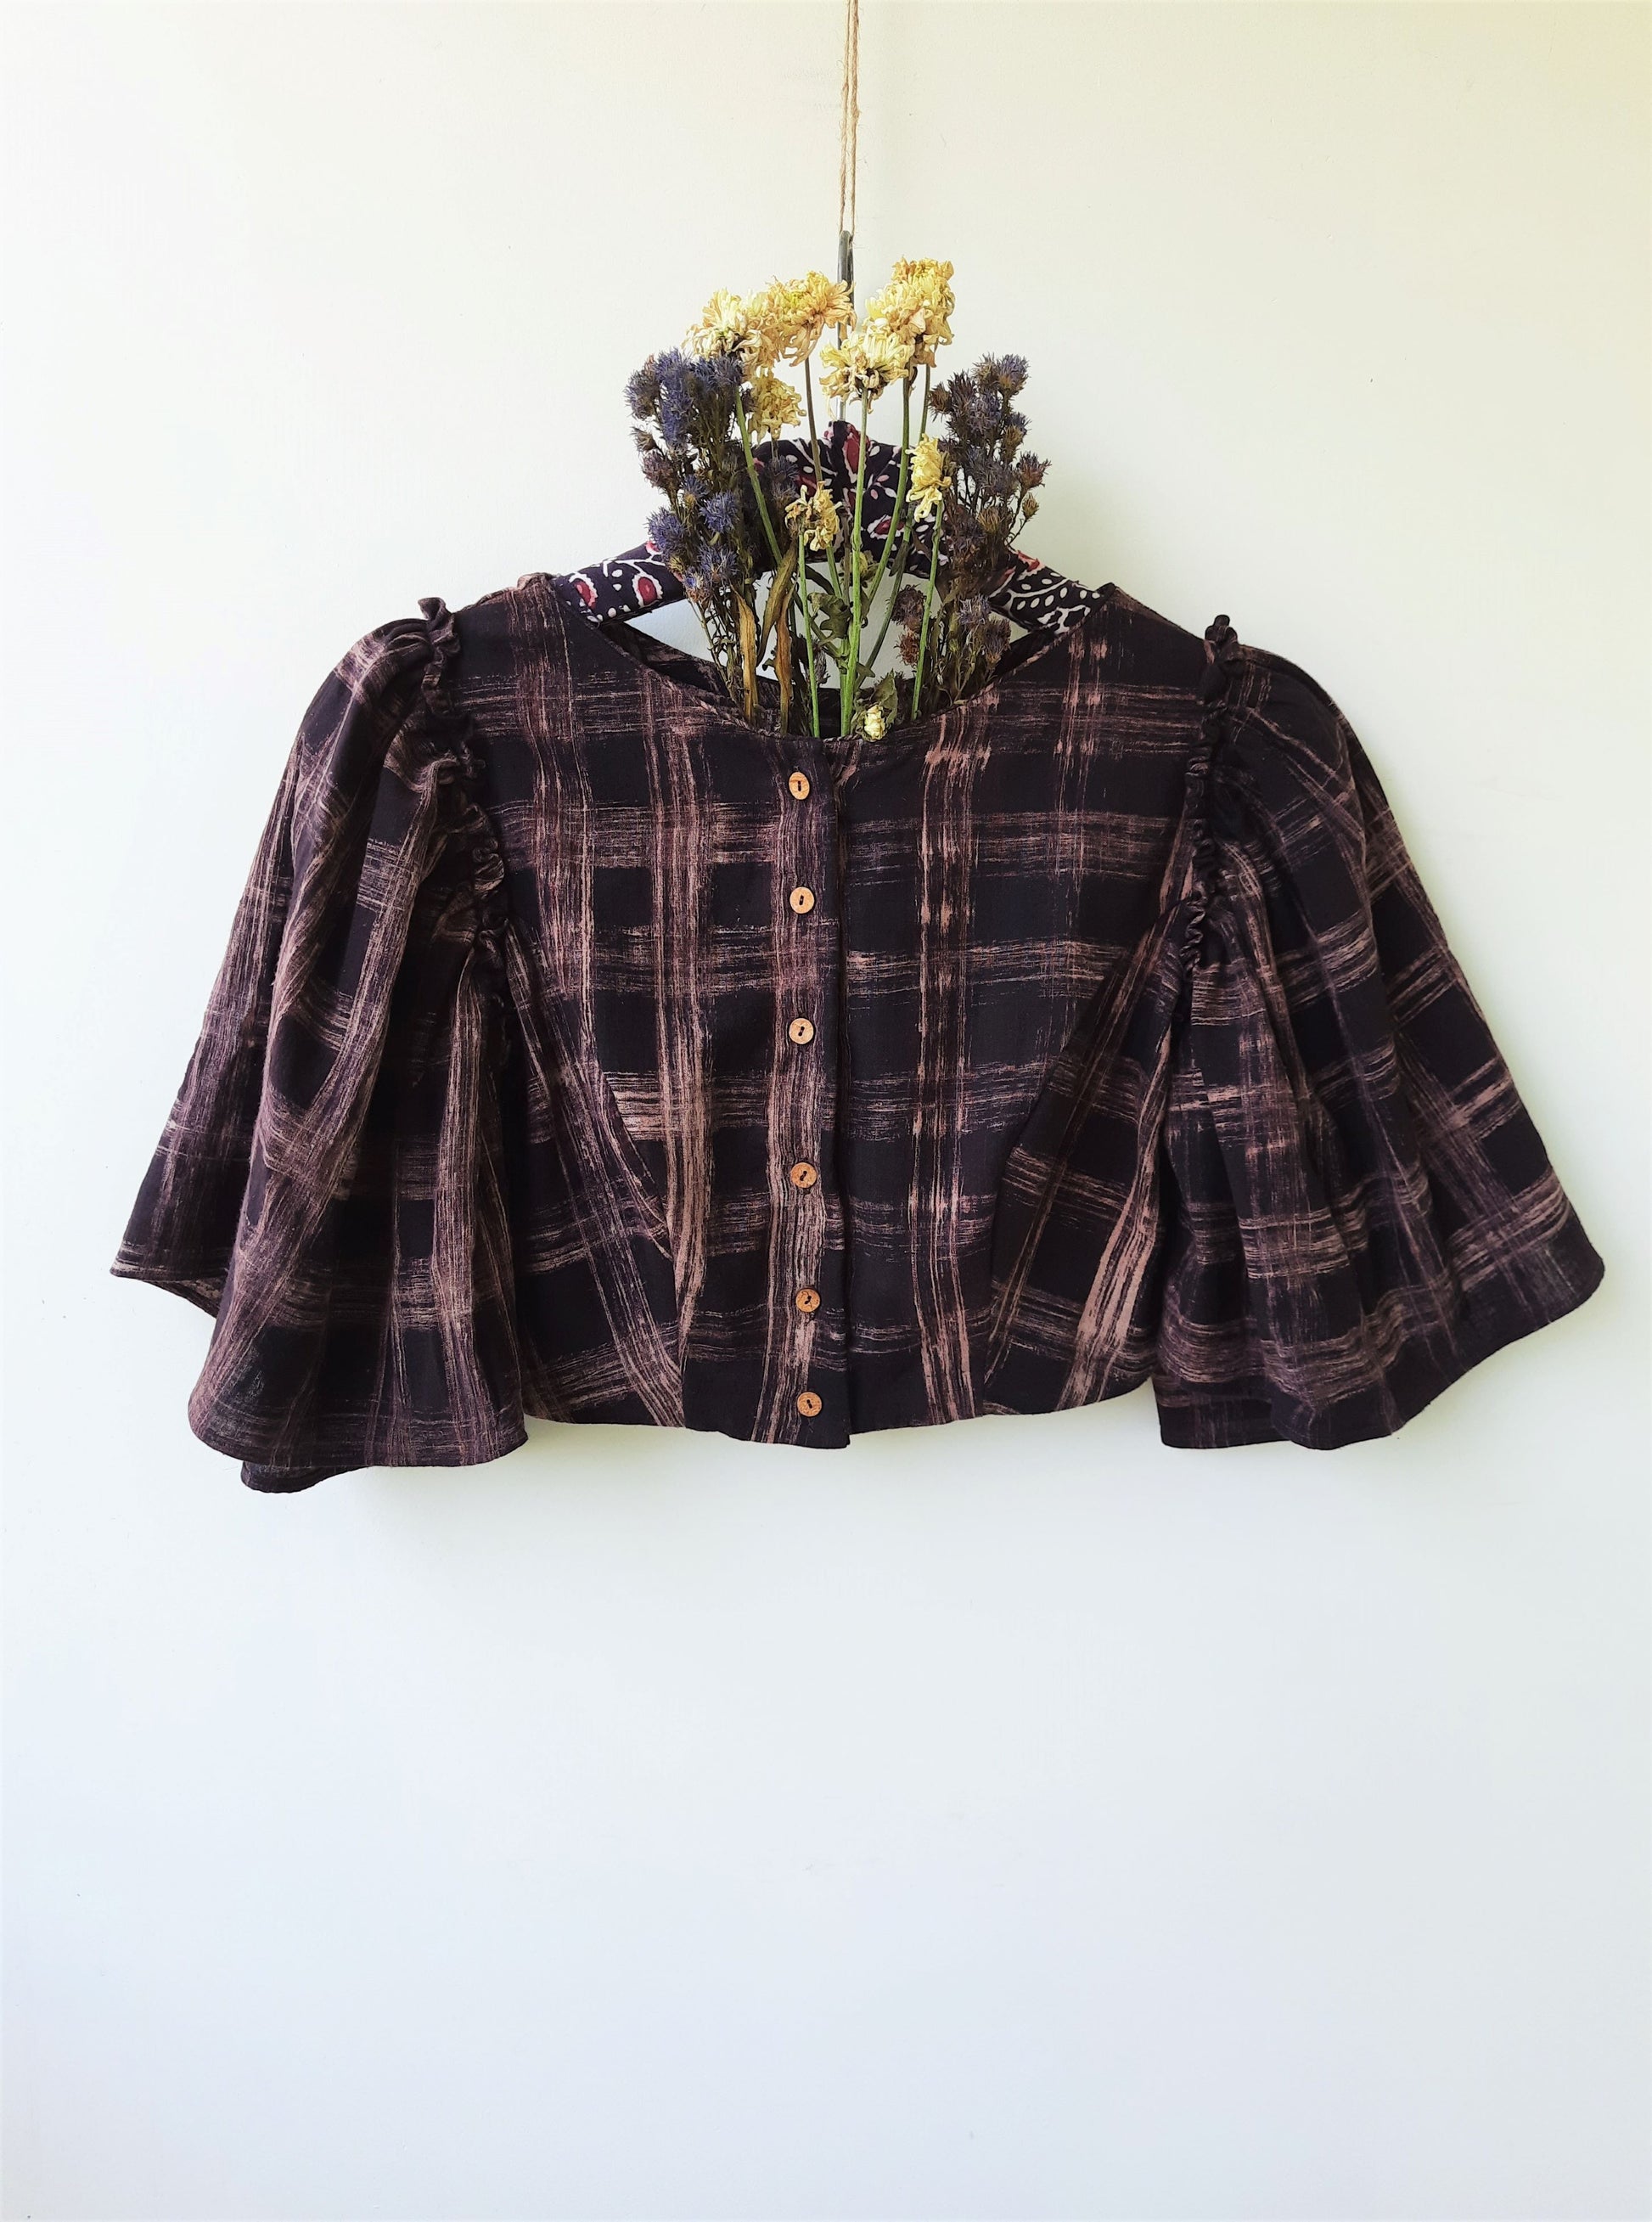 Hand spun and handwoven organic cotton blouse dyed using natural dyes, Organic cotton blouse, Hand block print organic cotton blouse